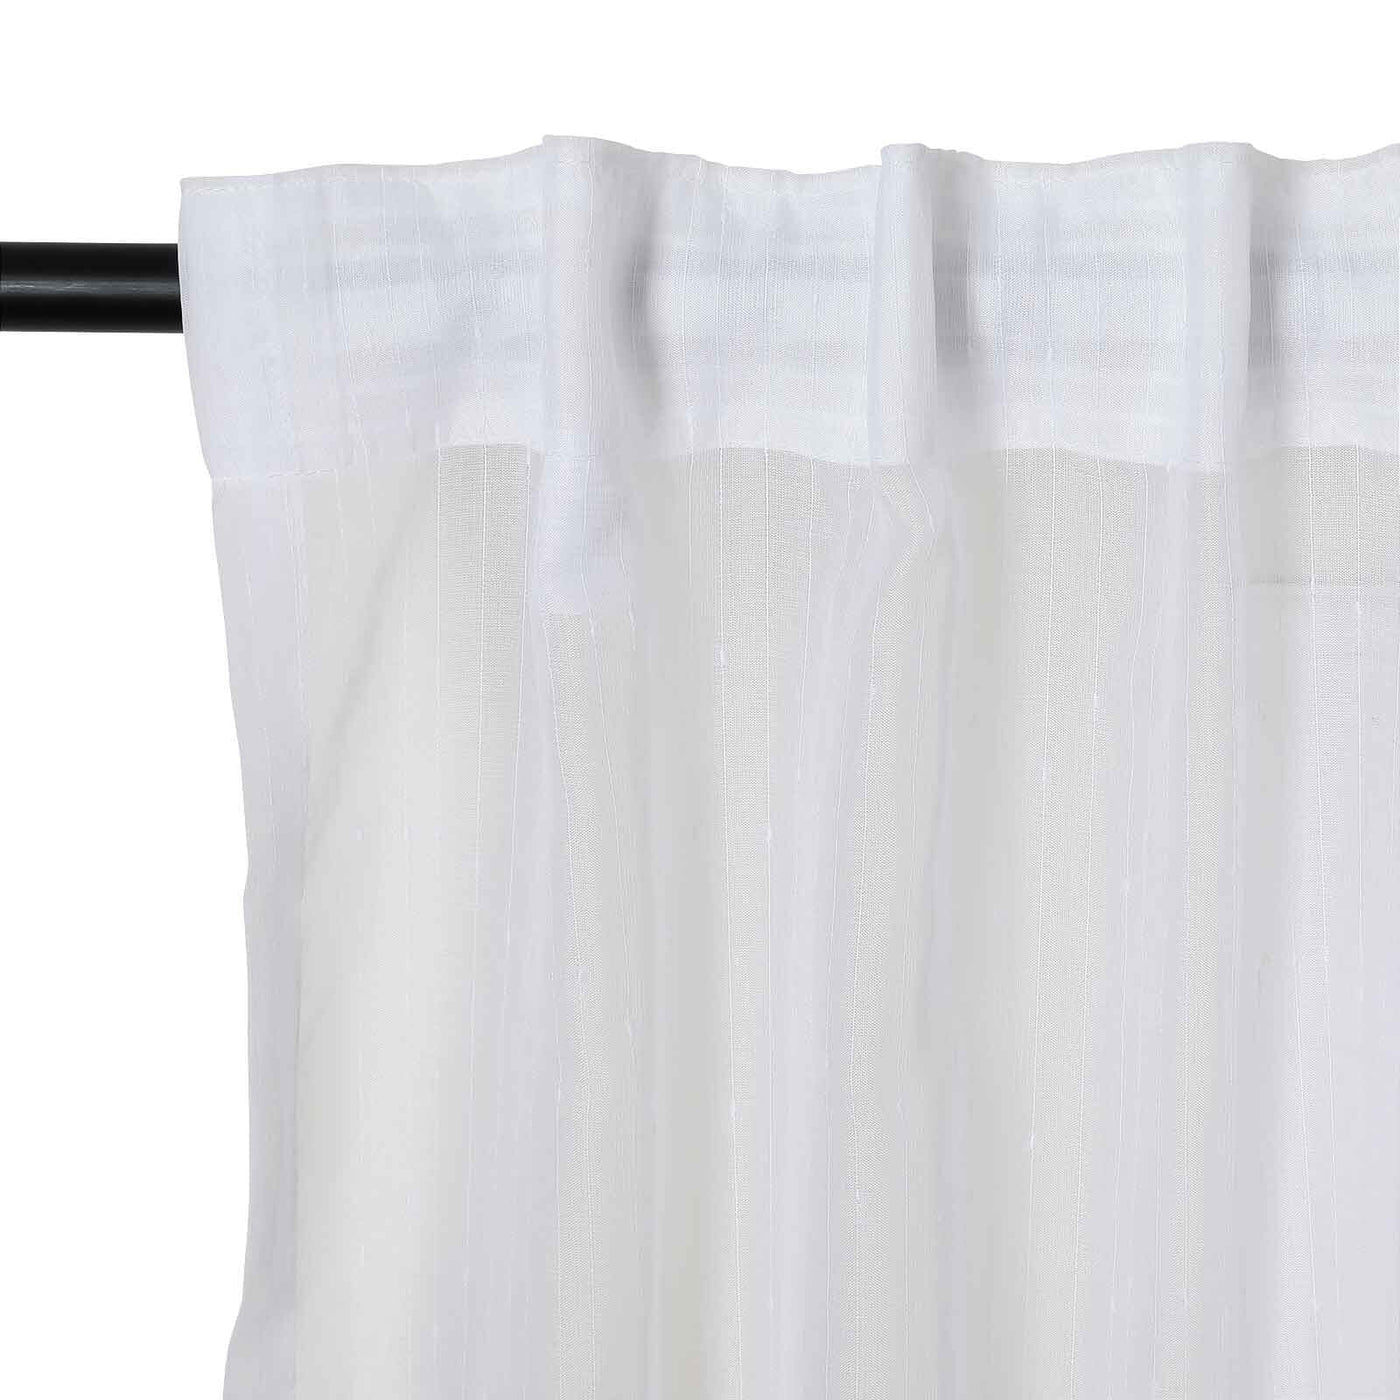 Florida Embossed White Semi Sheer Curtain Soft Top